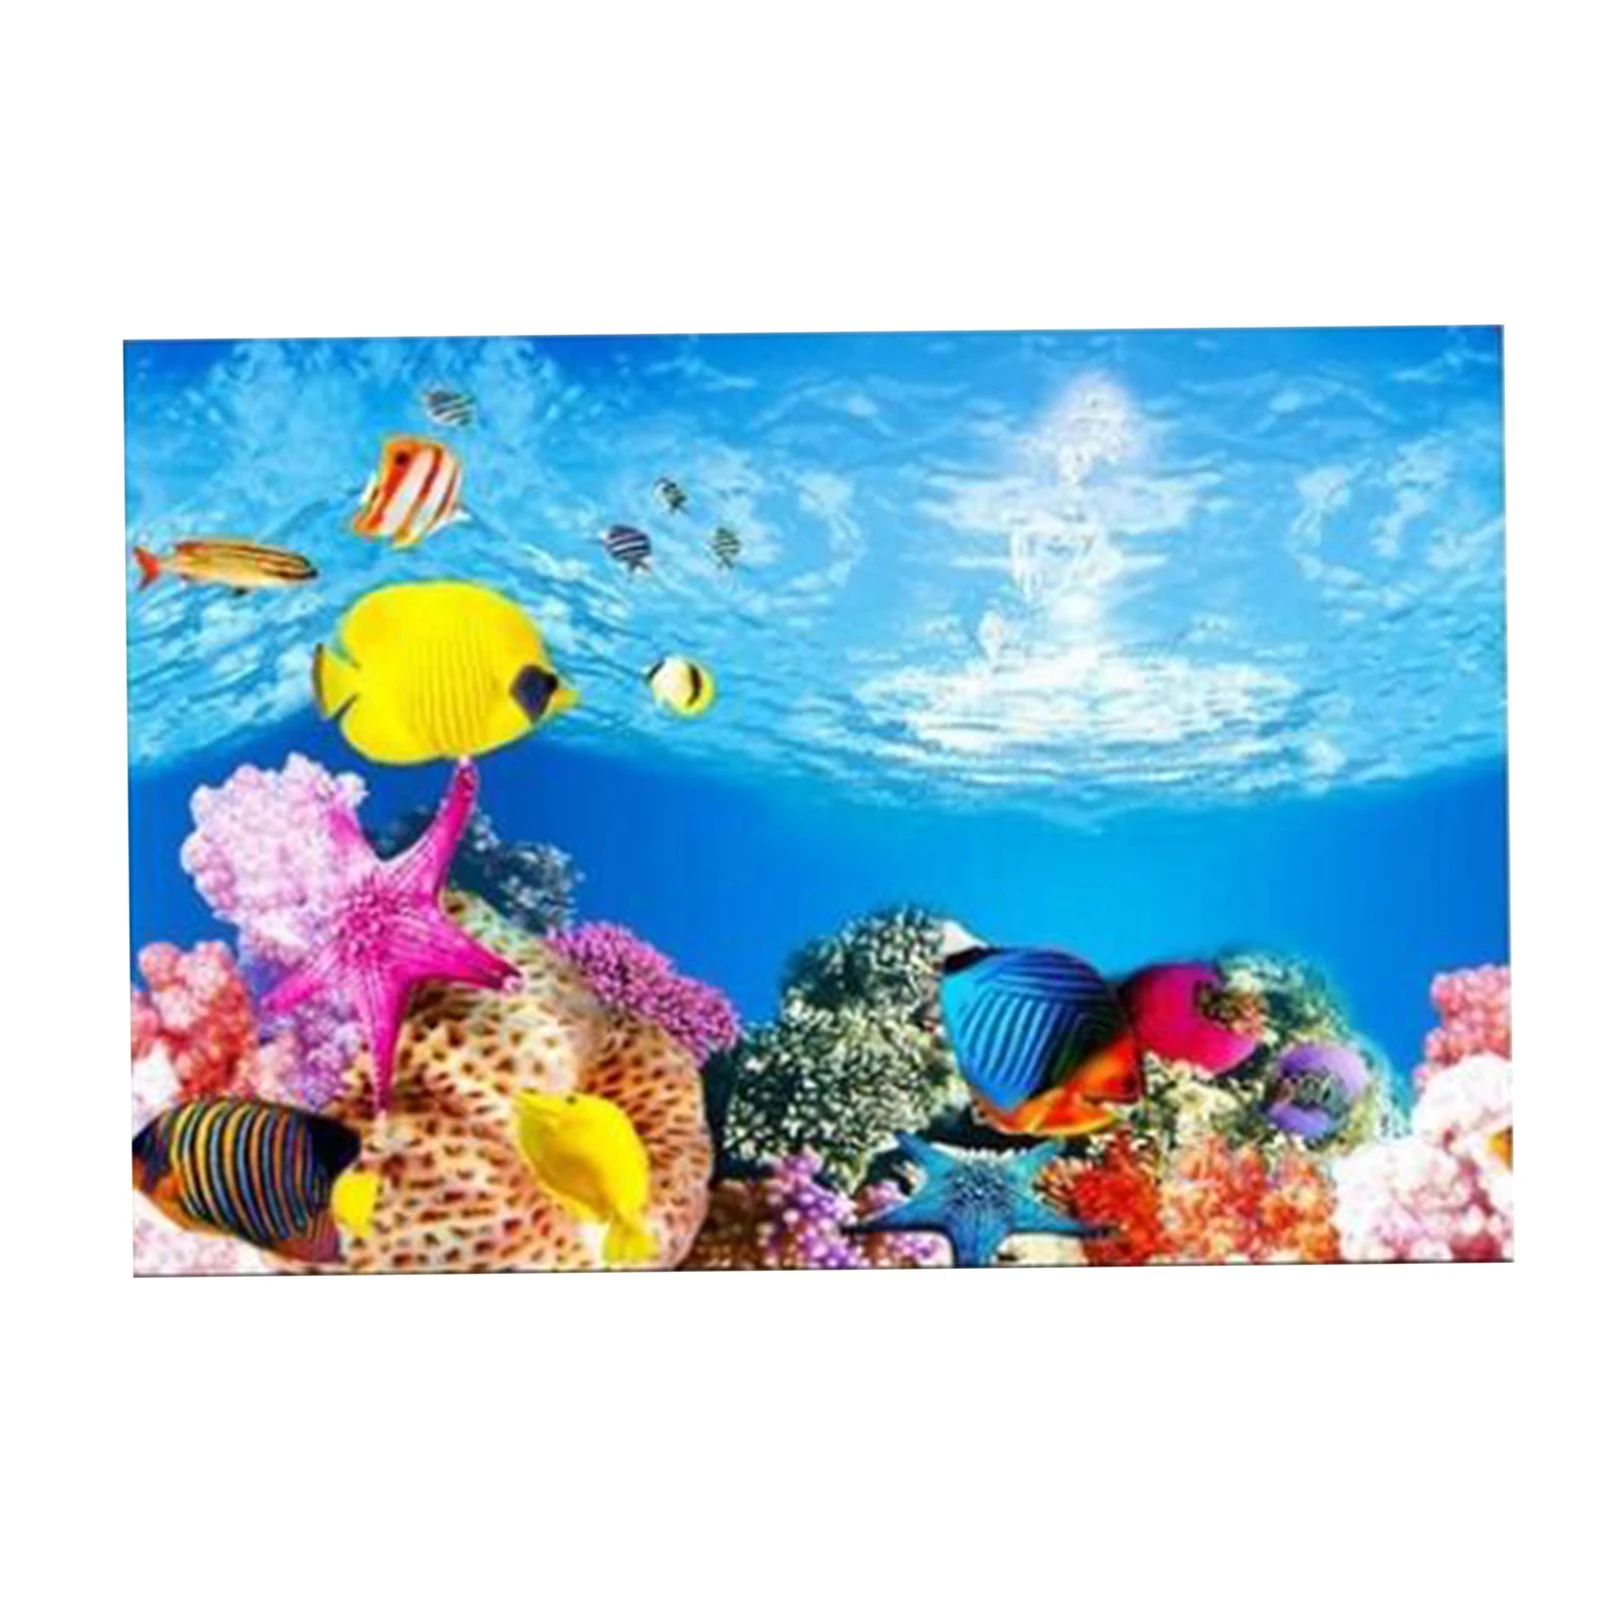 BMALL Aquarium Background Fish Tank Sticker Colorful Coral and Fish PVC Aquarium Decorative Paper 